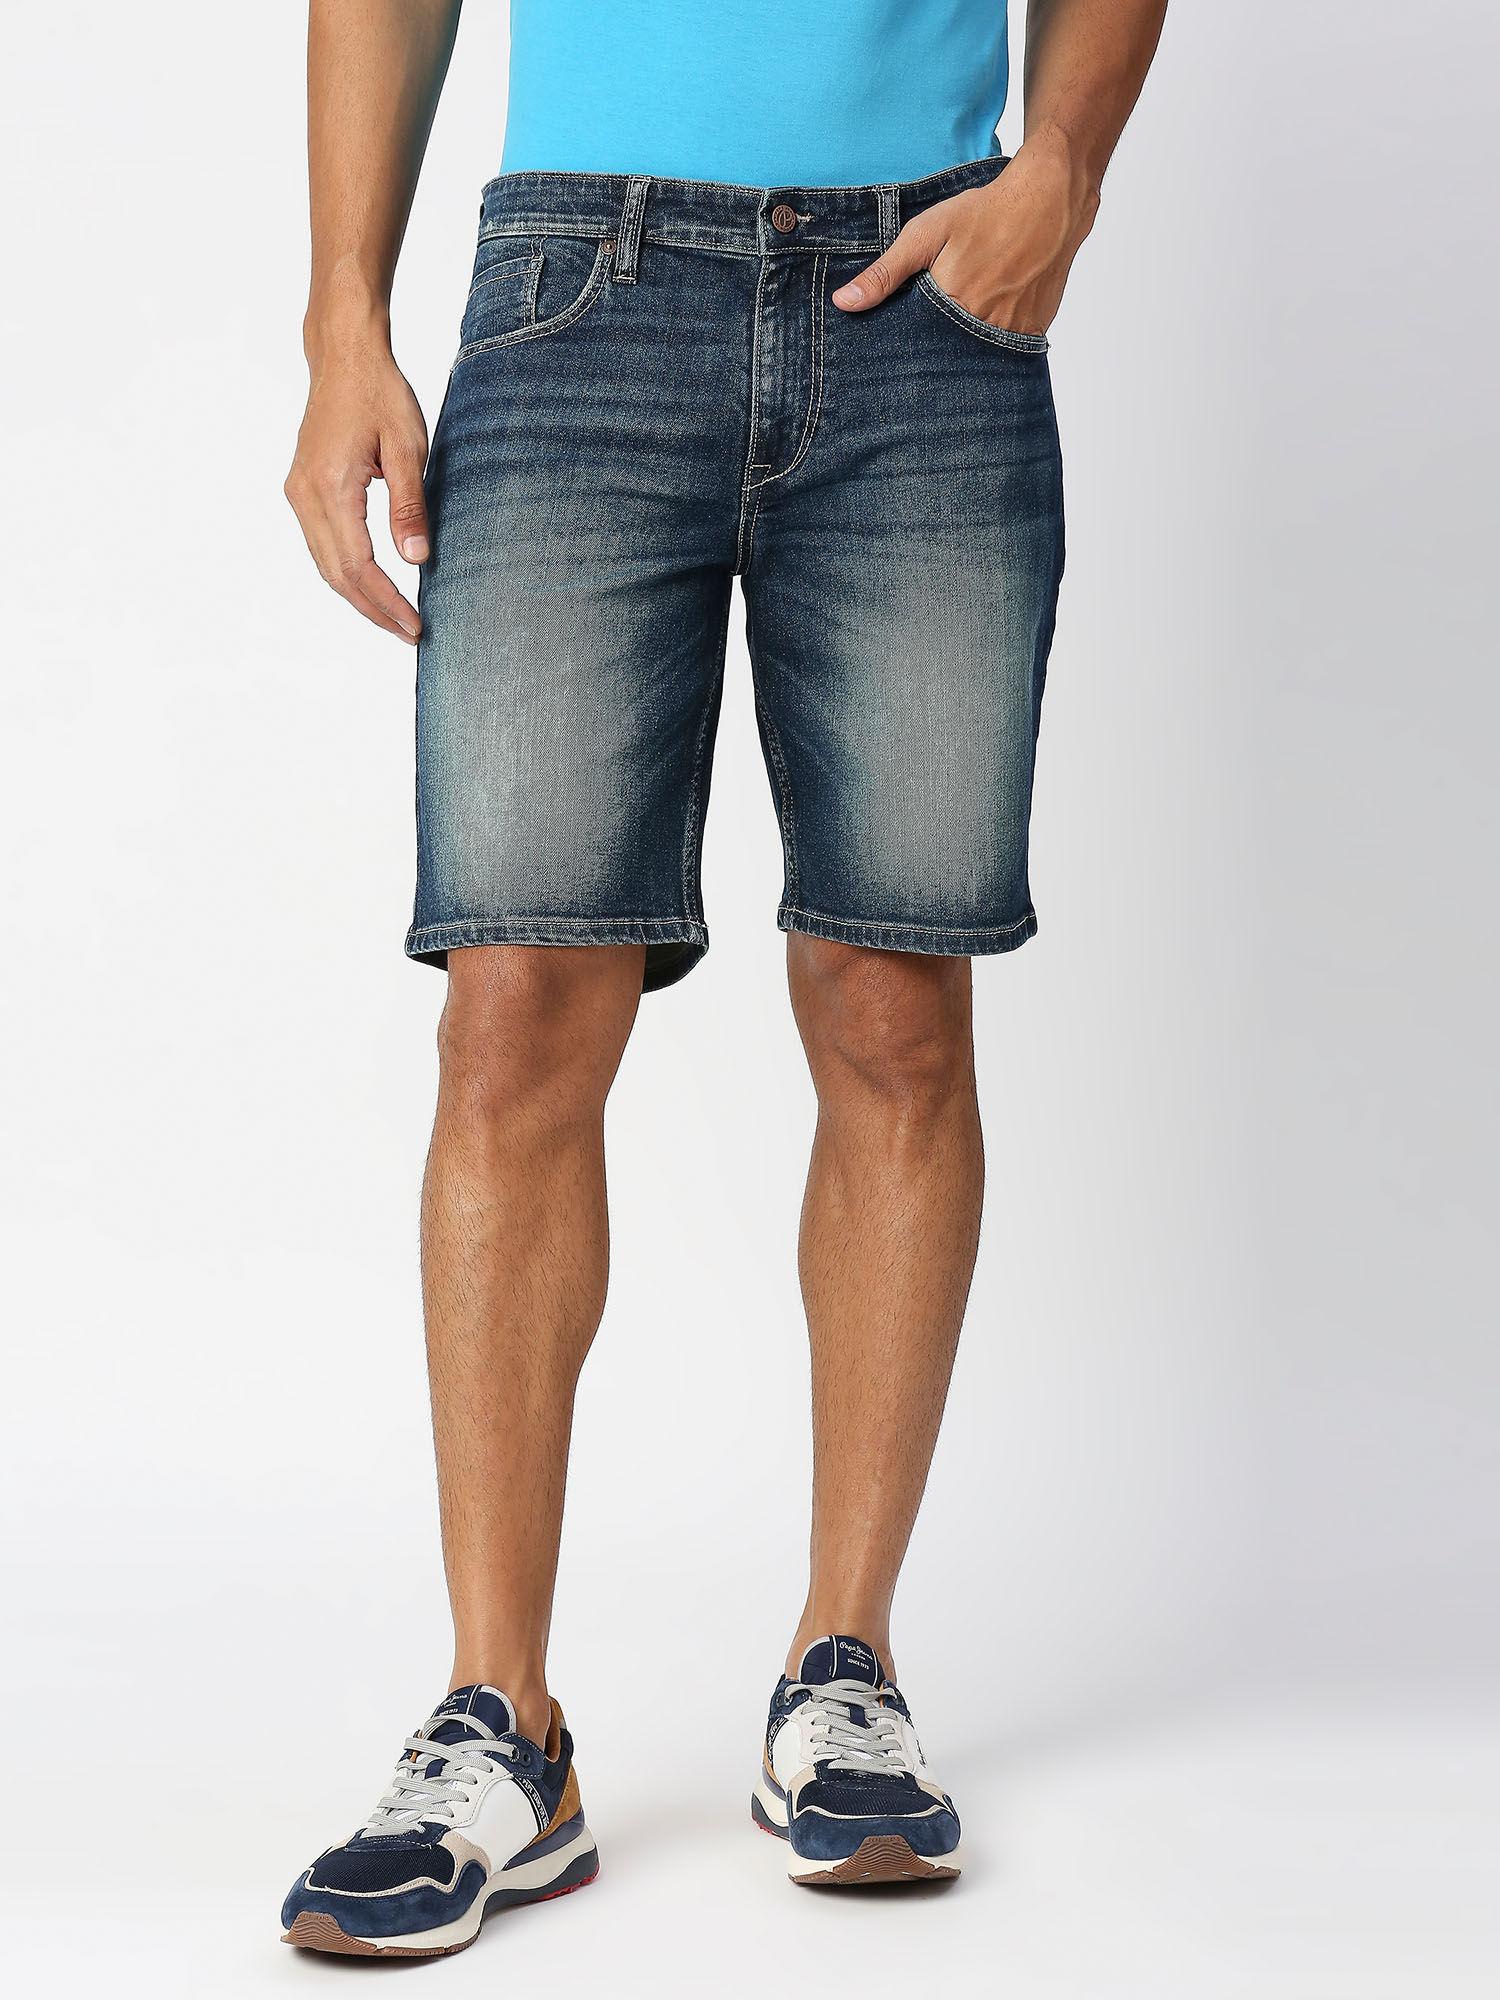 navy blue chinox shorts regular fit mid waist shorts